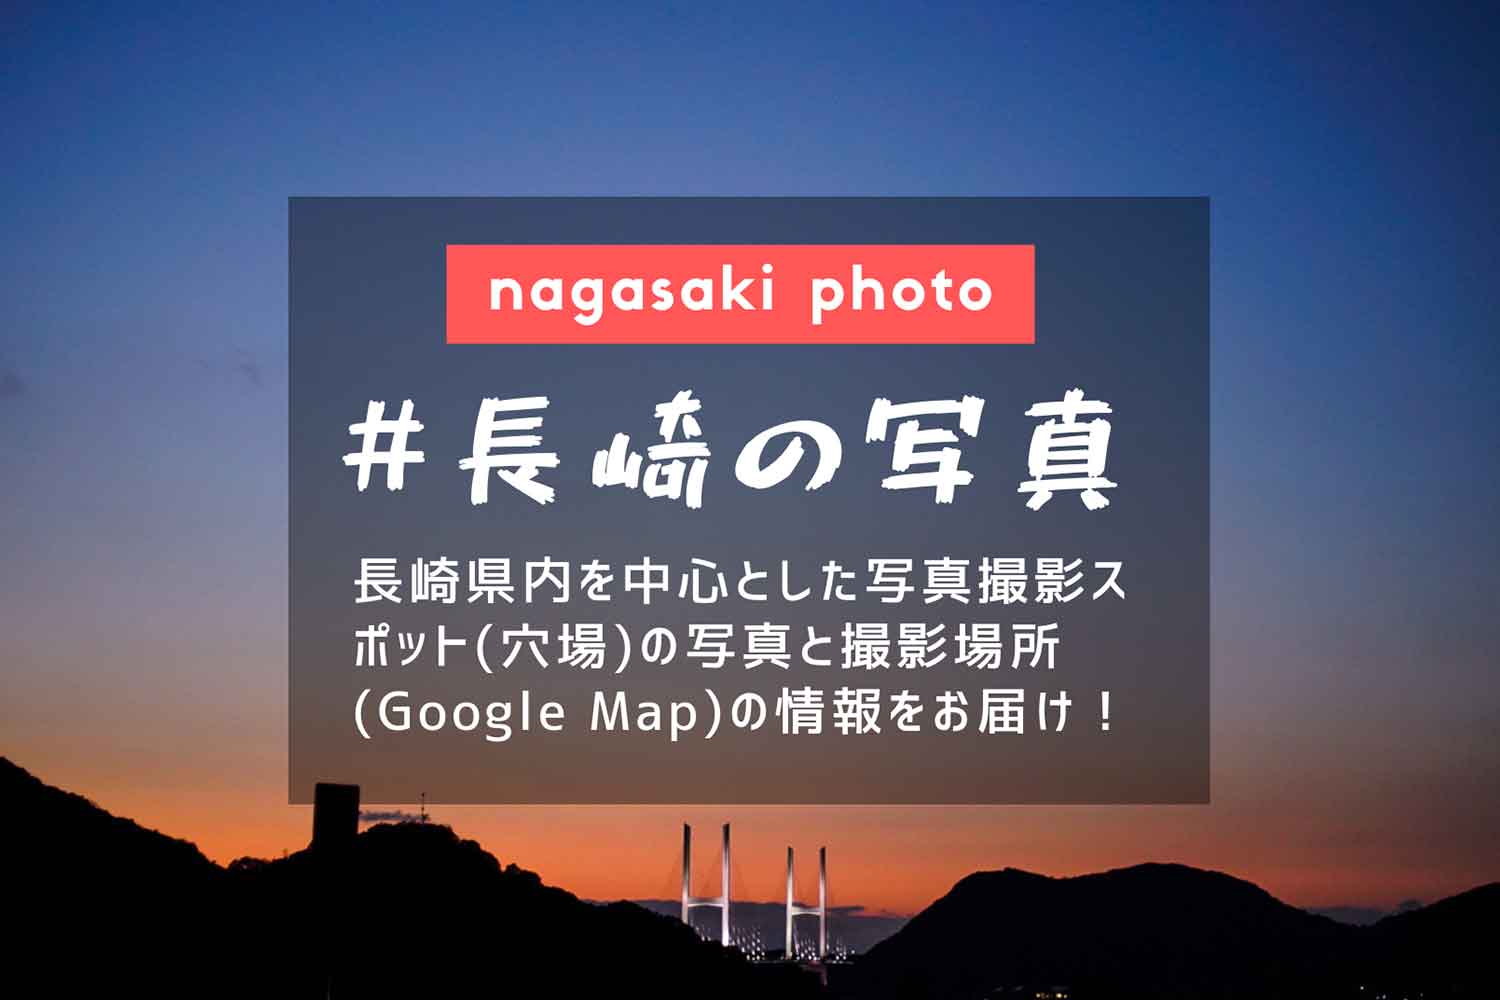 nagasaki-photo-thumbnail